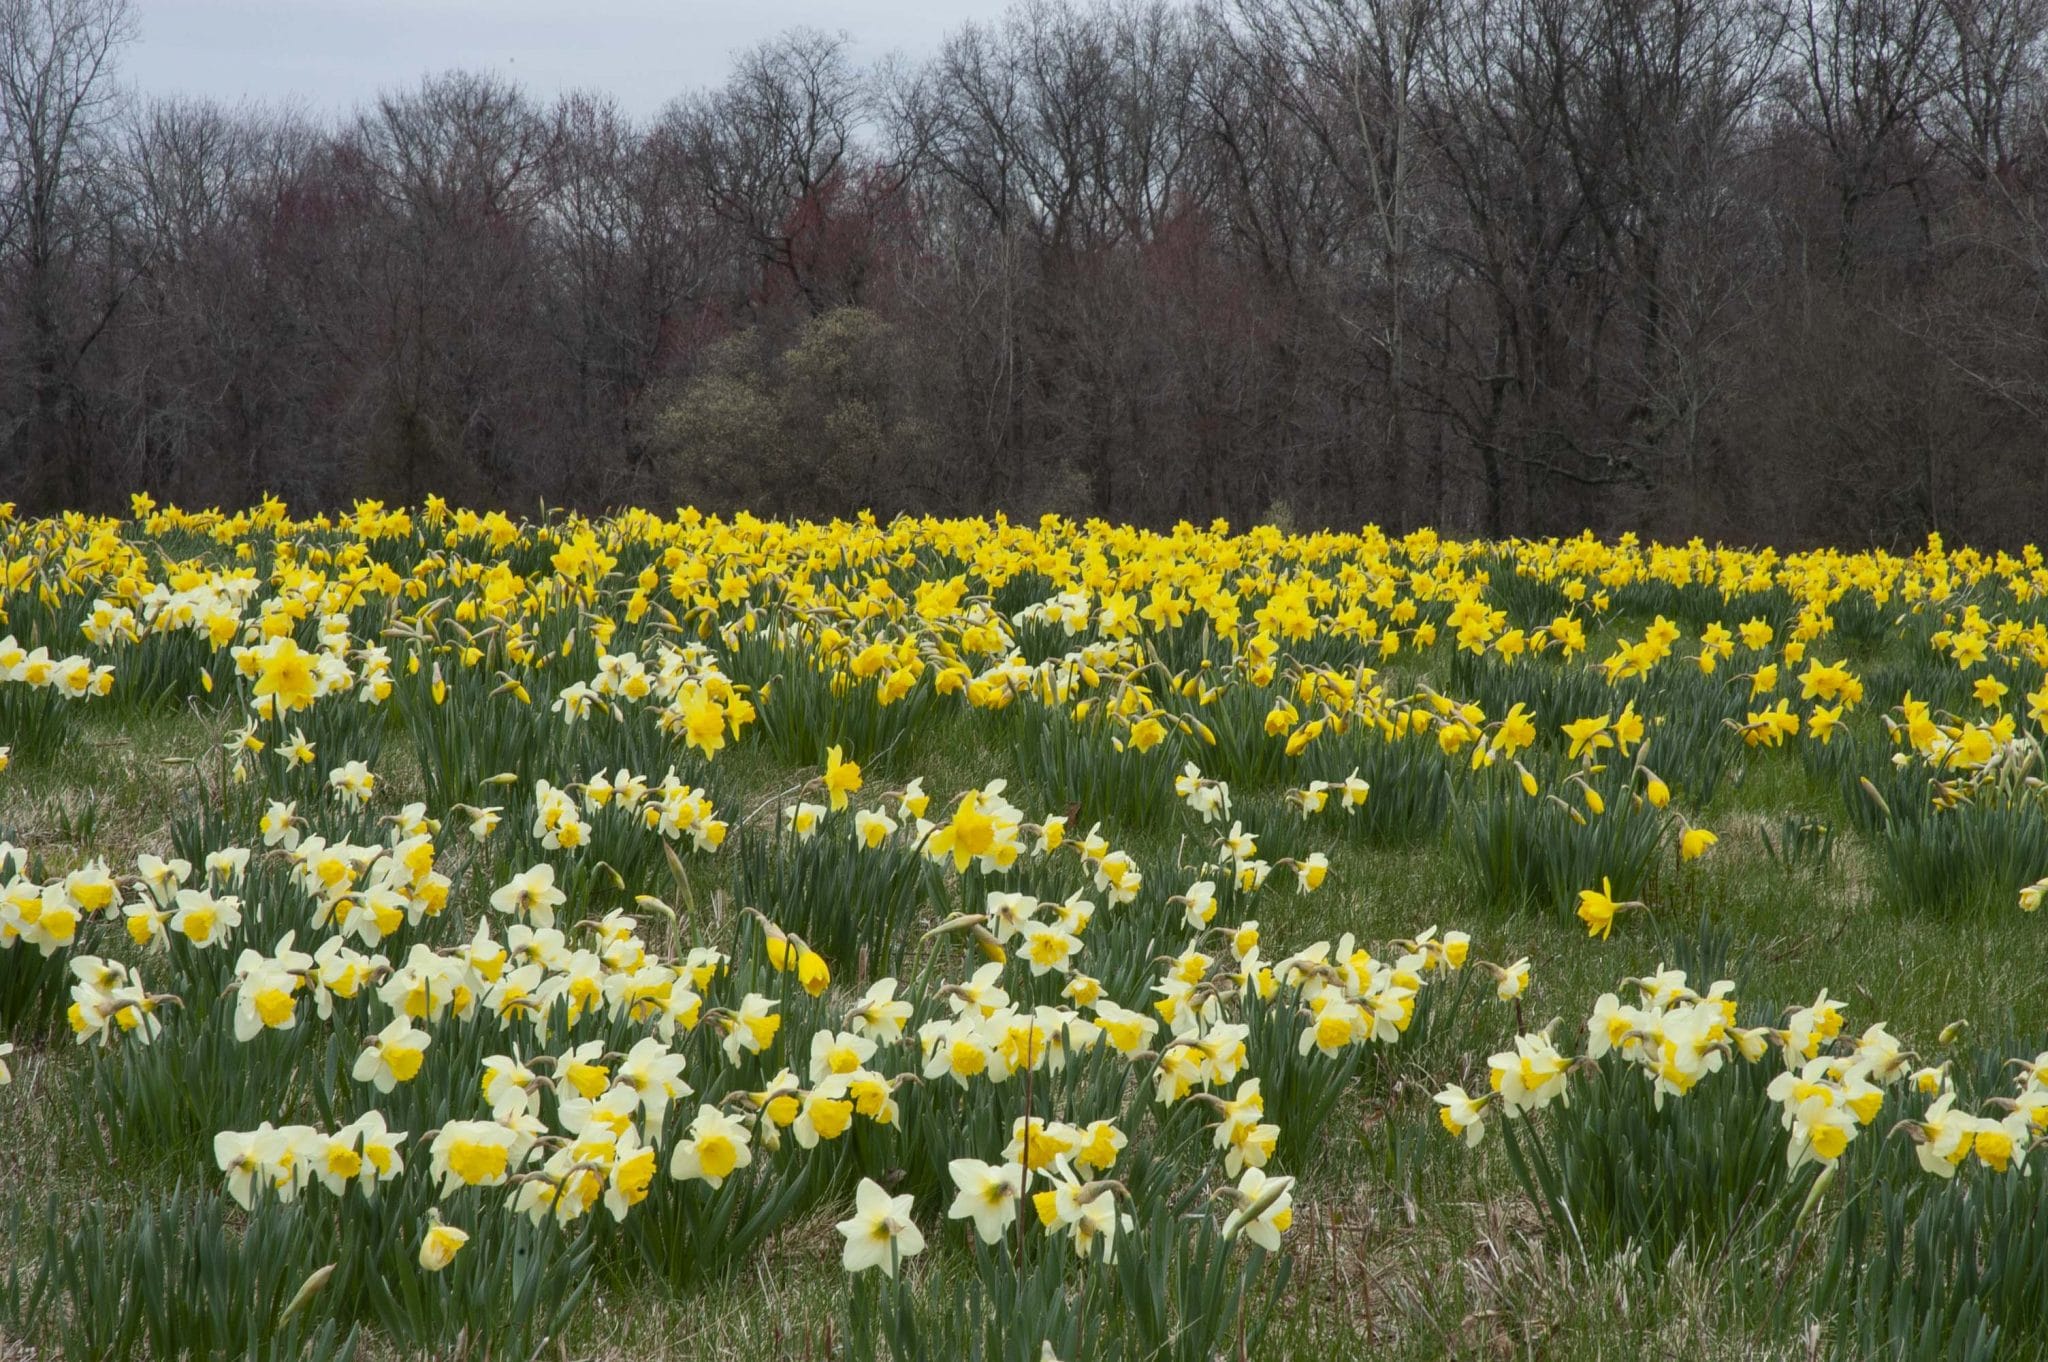 Naturalized daffodils